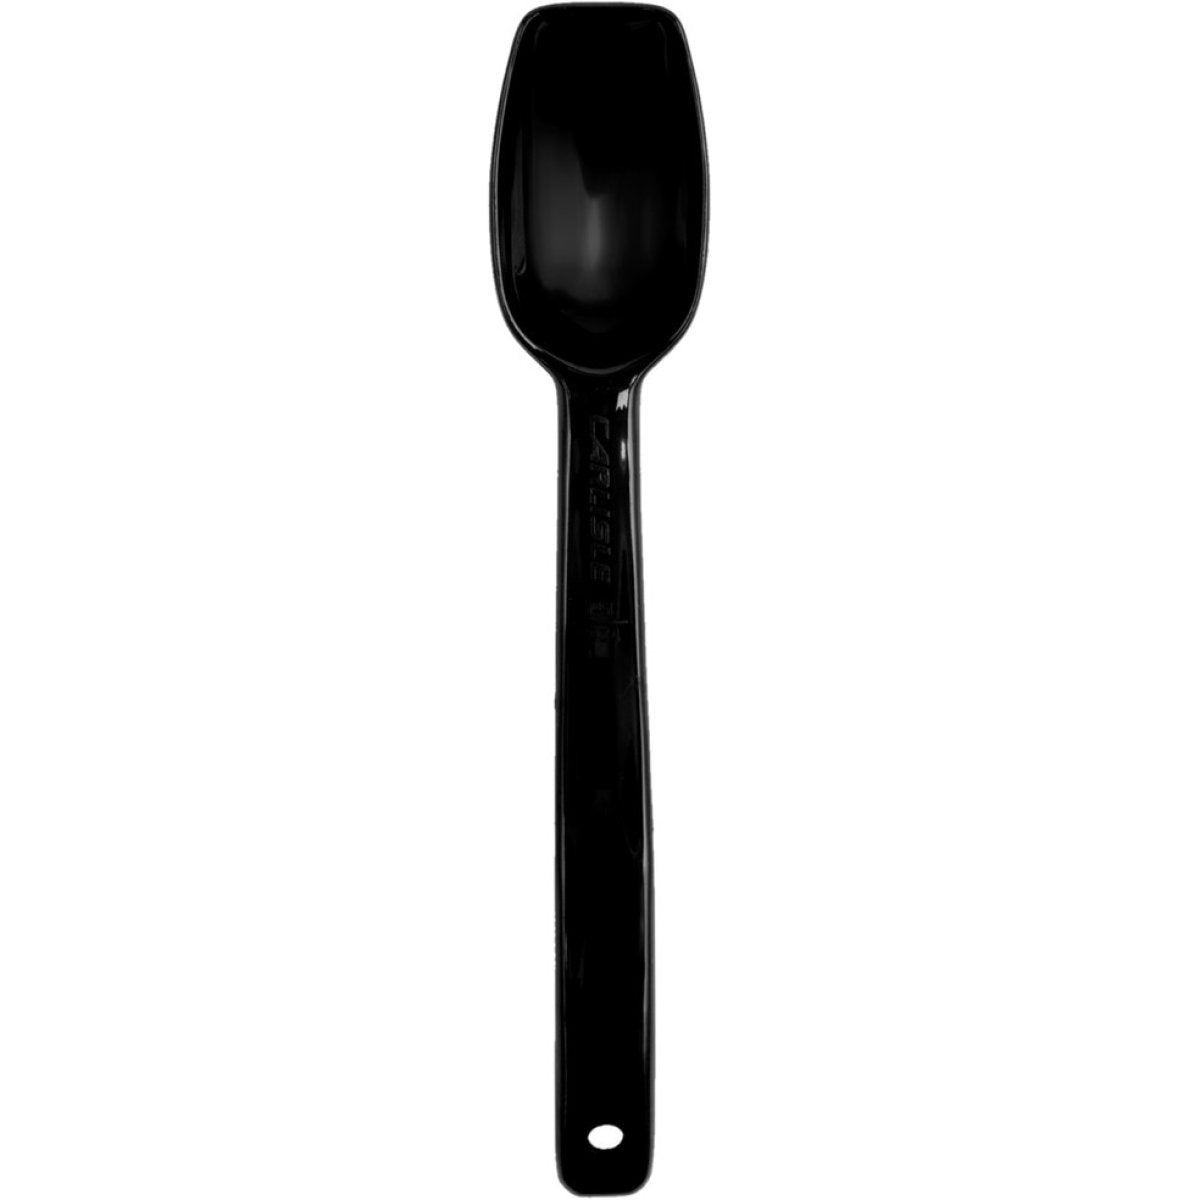 0.5oz Catering Solid Serving Spoon 8" Handle Black Polycarbonate Rental